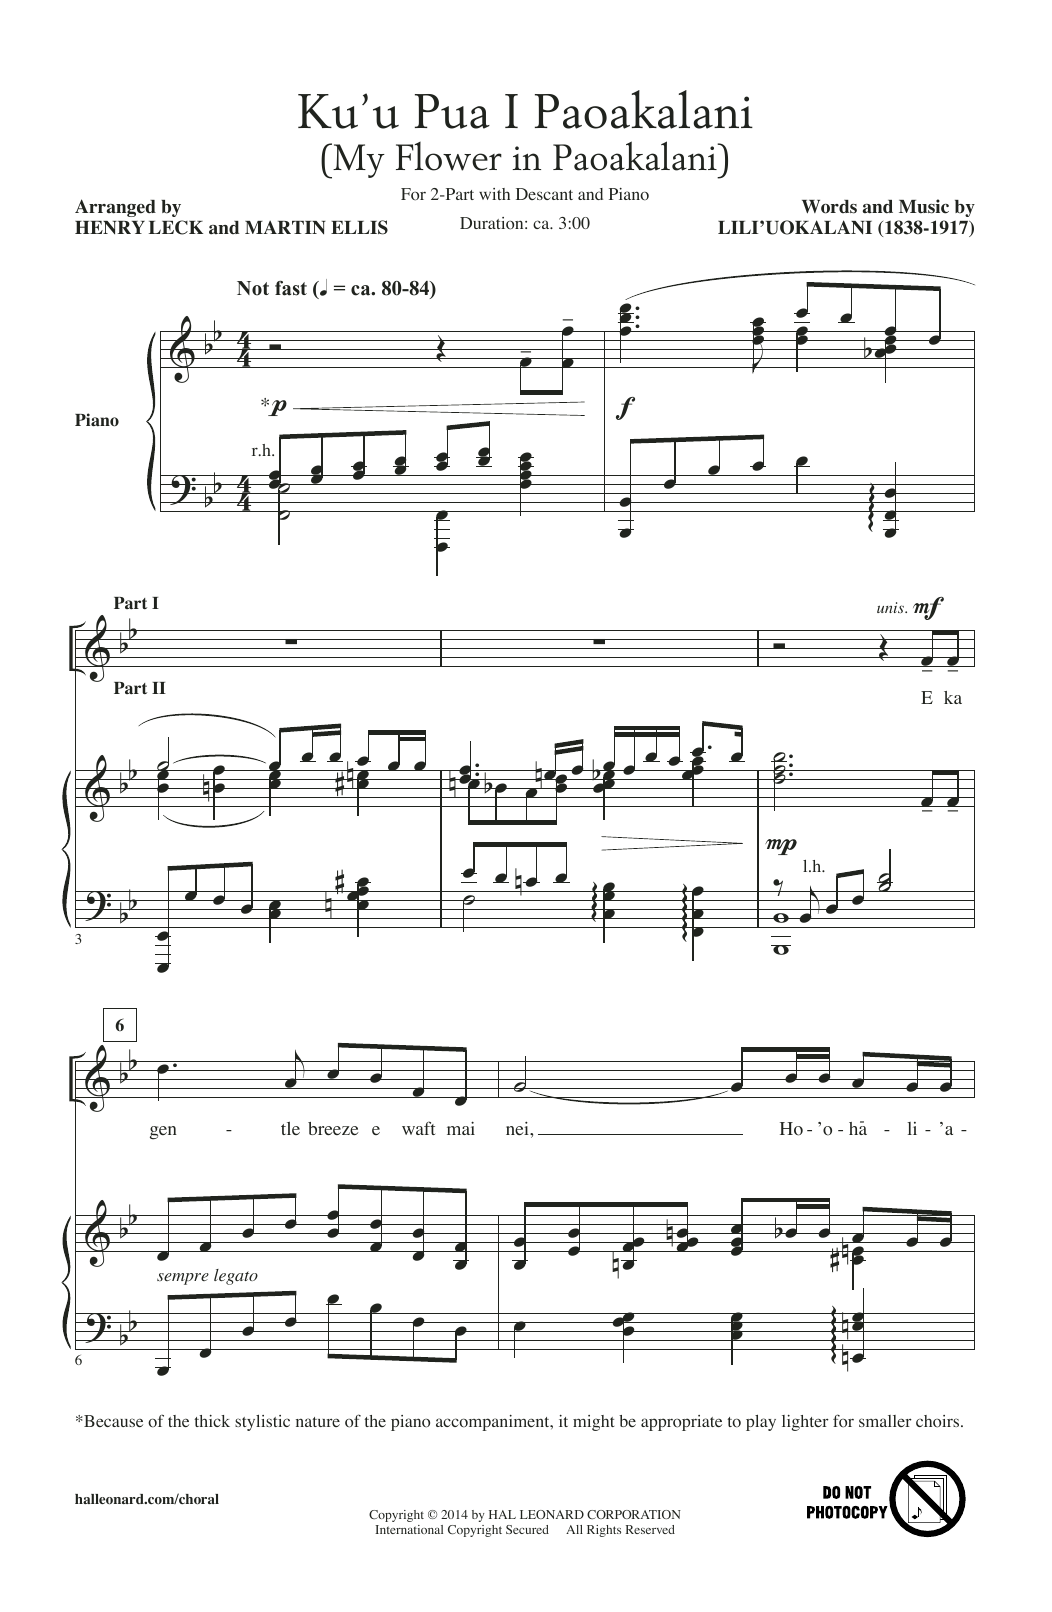 Henry Leck Ku'u Pua I Paoakalani Sheet Music Notes & Chords for Choral - Download or Print PDF